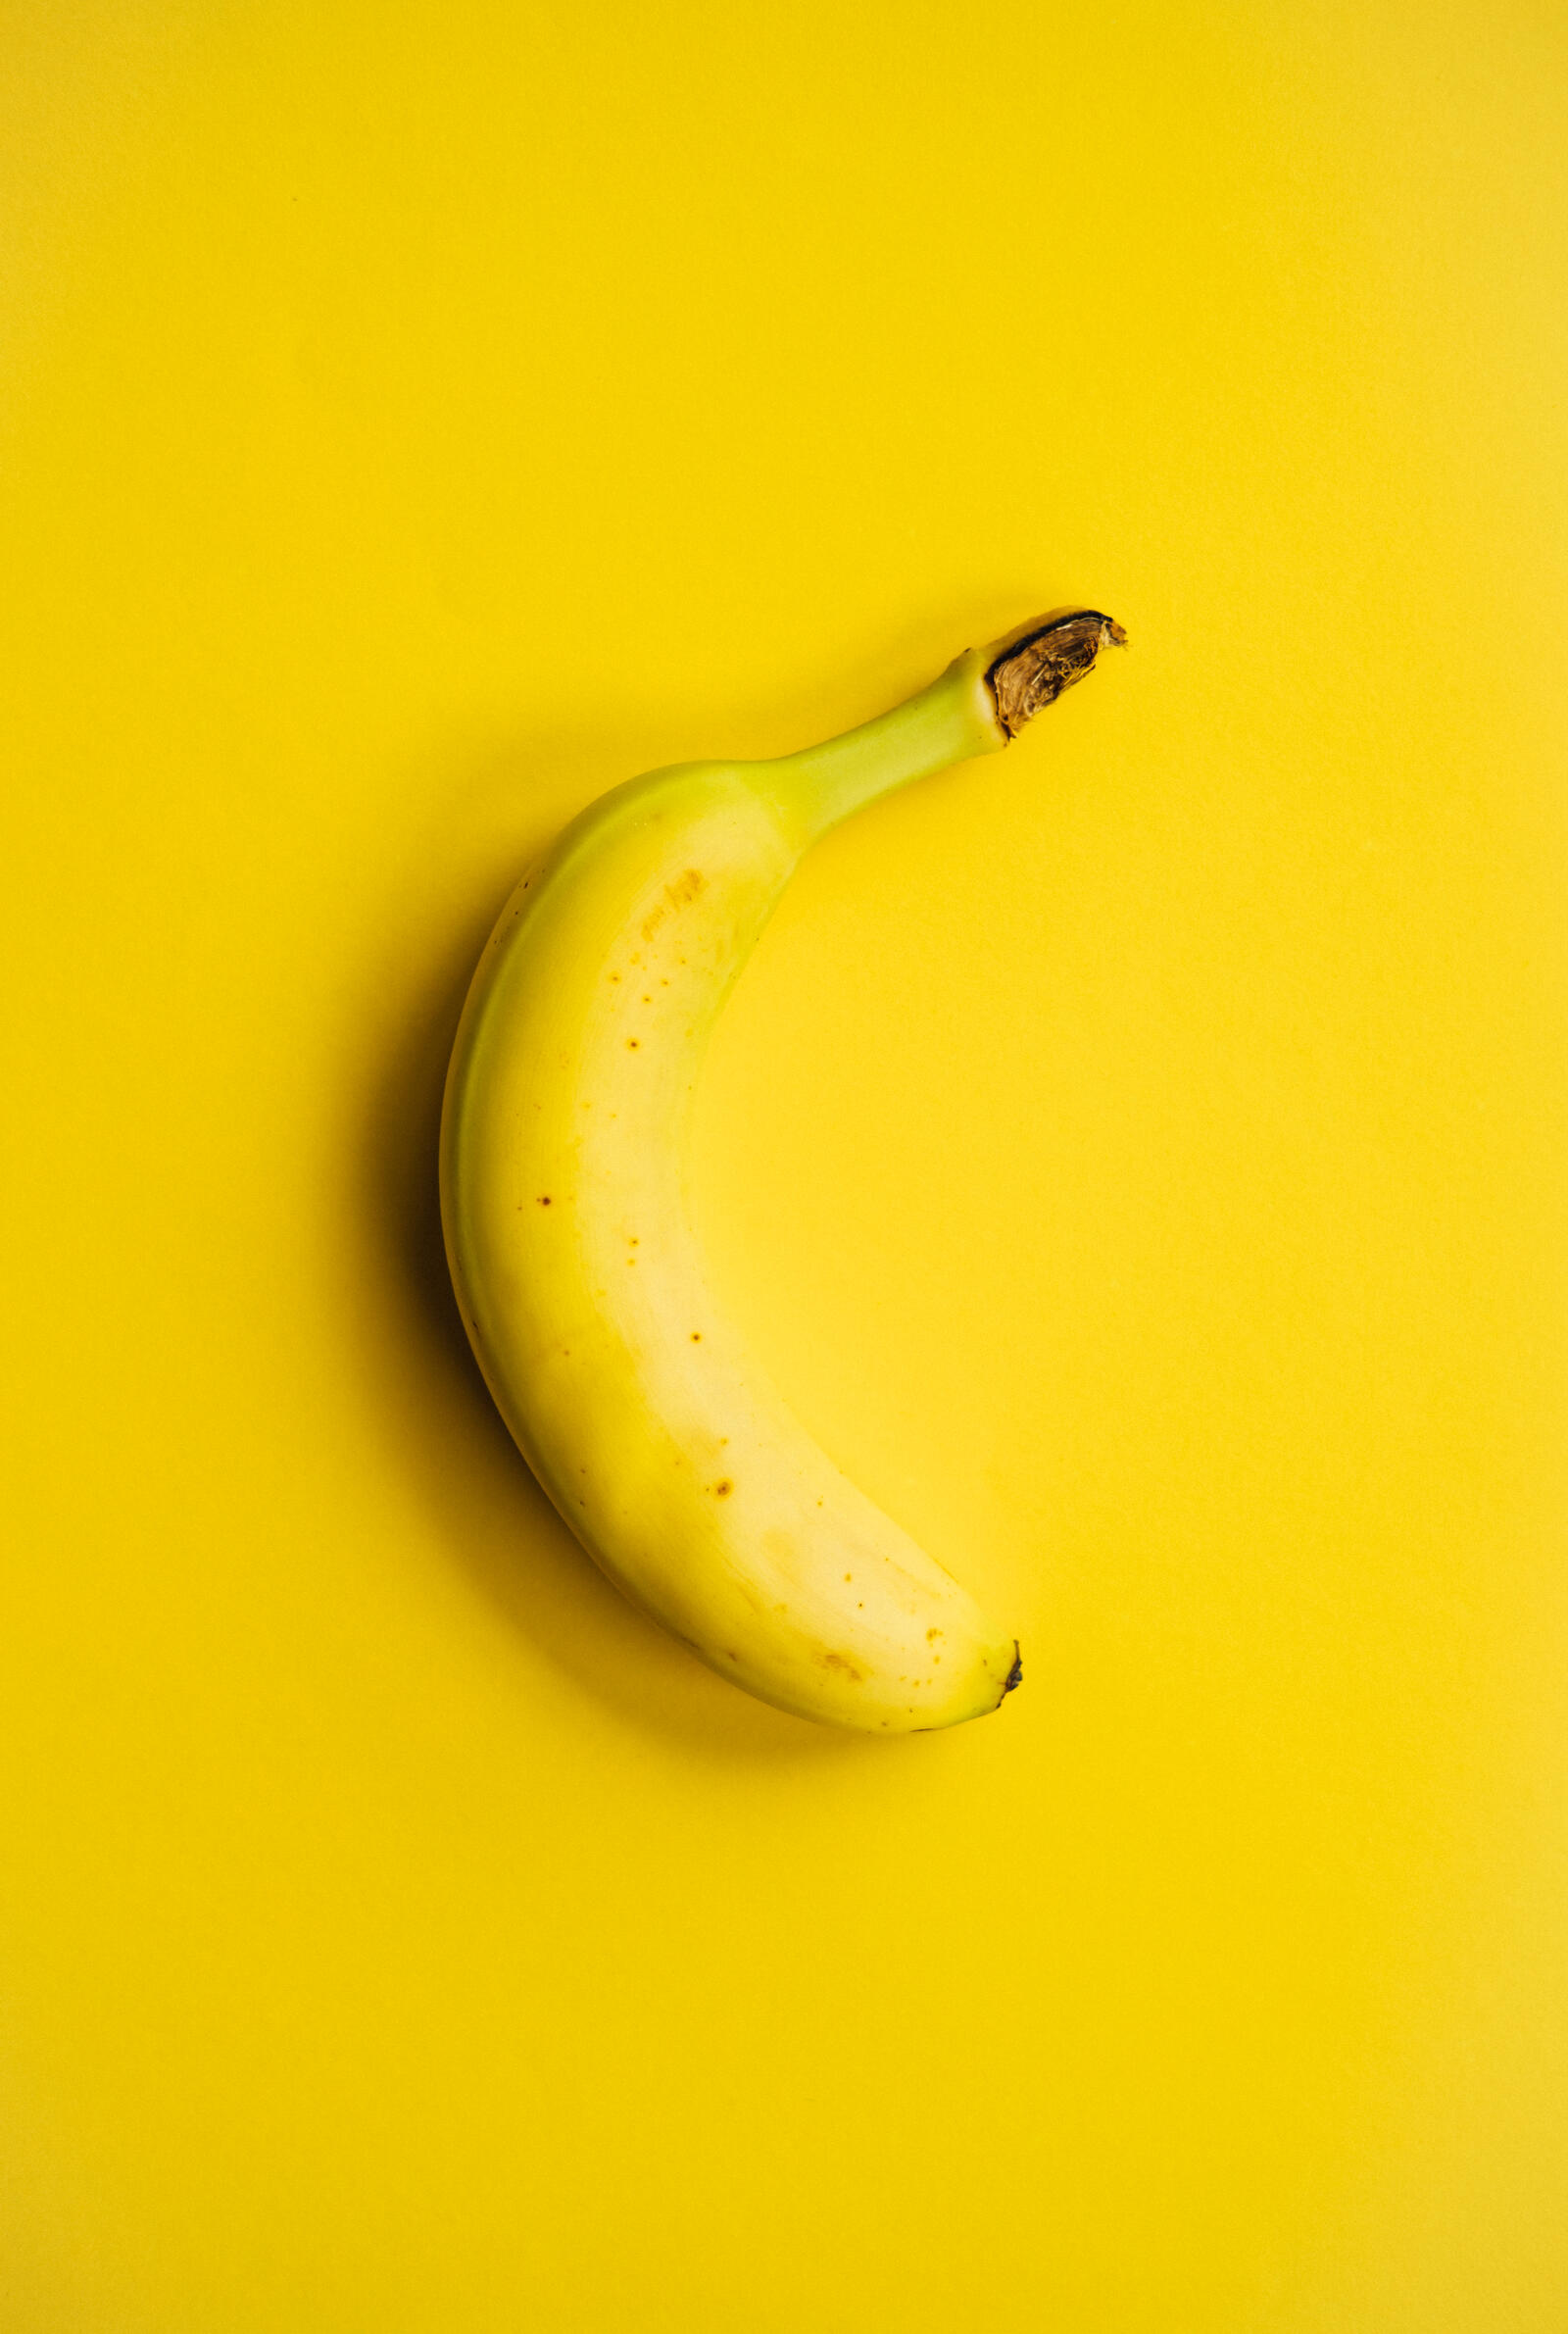 Free photo Yellow banana on a yellow background